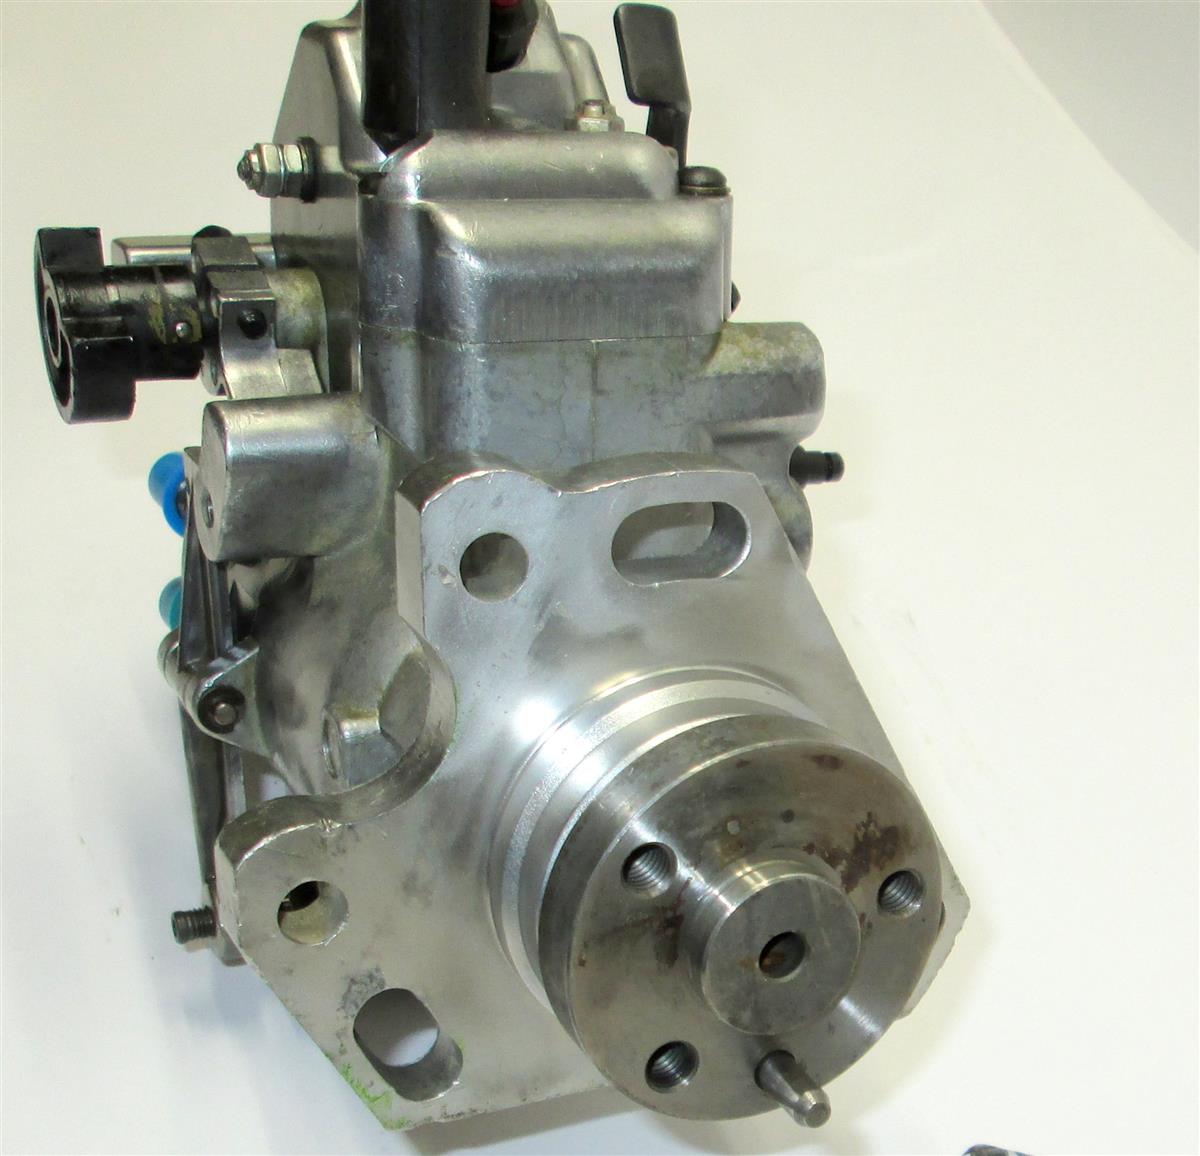 HM-3466R | Hm-3466R Stanadyne Fuel Injection Pump 6.5L Non-Turbo GM Style Diesel Engine HMMWV (17).JPG